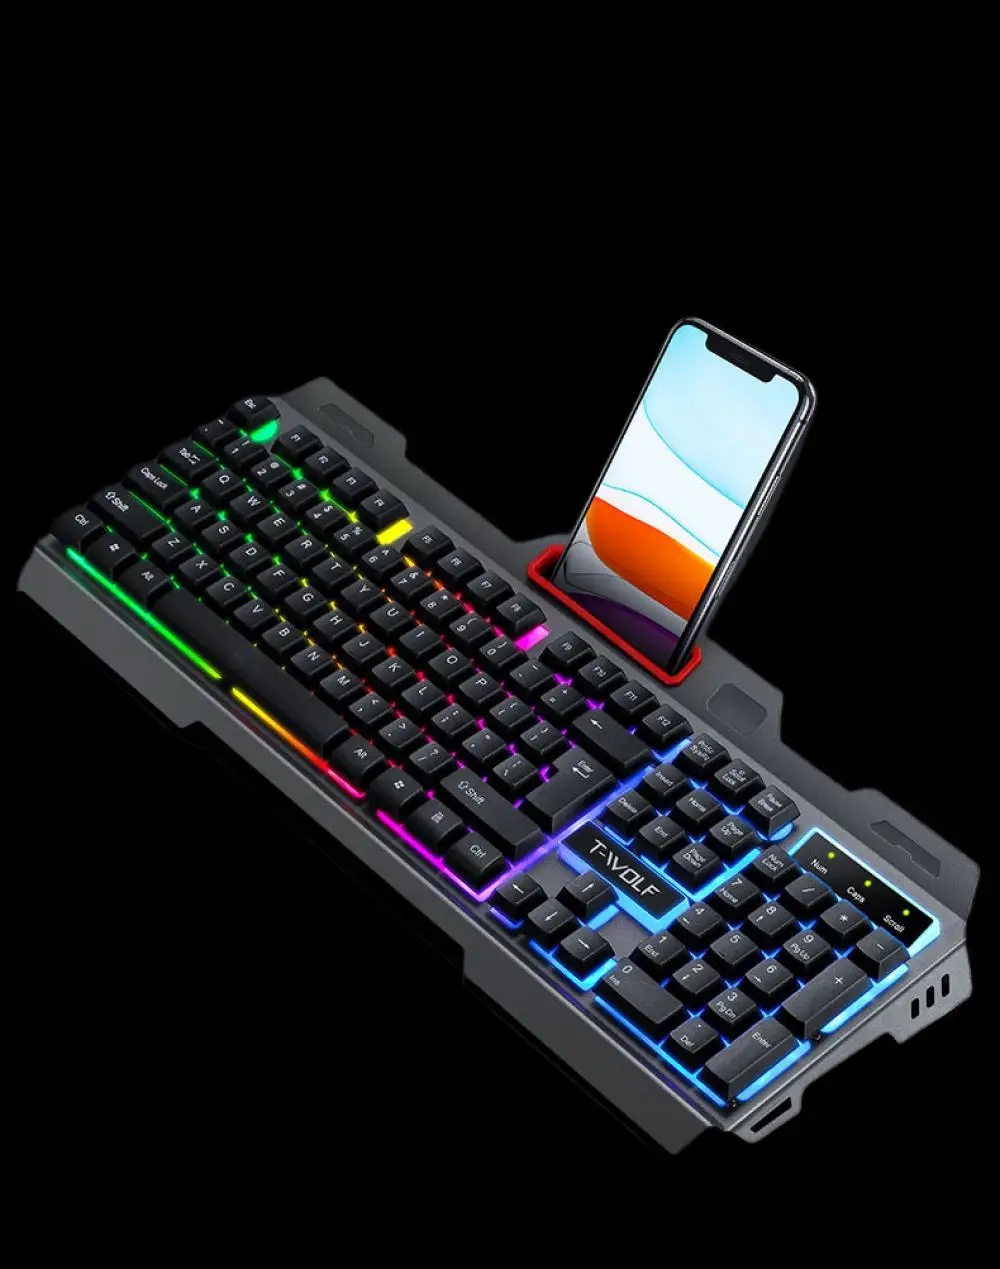 USB Gaming Keyboard Backlit RGB LED Hybrid Backlit USB 104 Key Wired Keyboard Suitable For Gaming PC Laptop Office enlarge